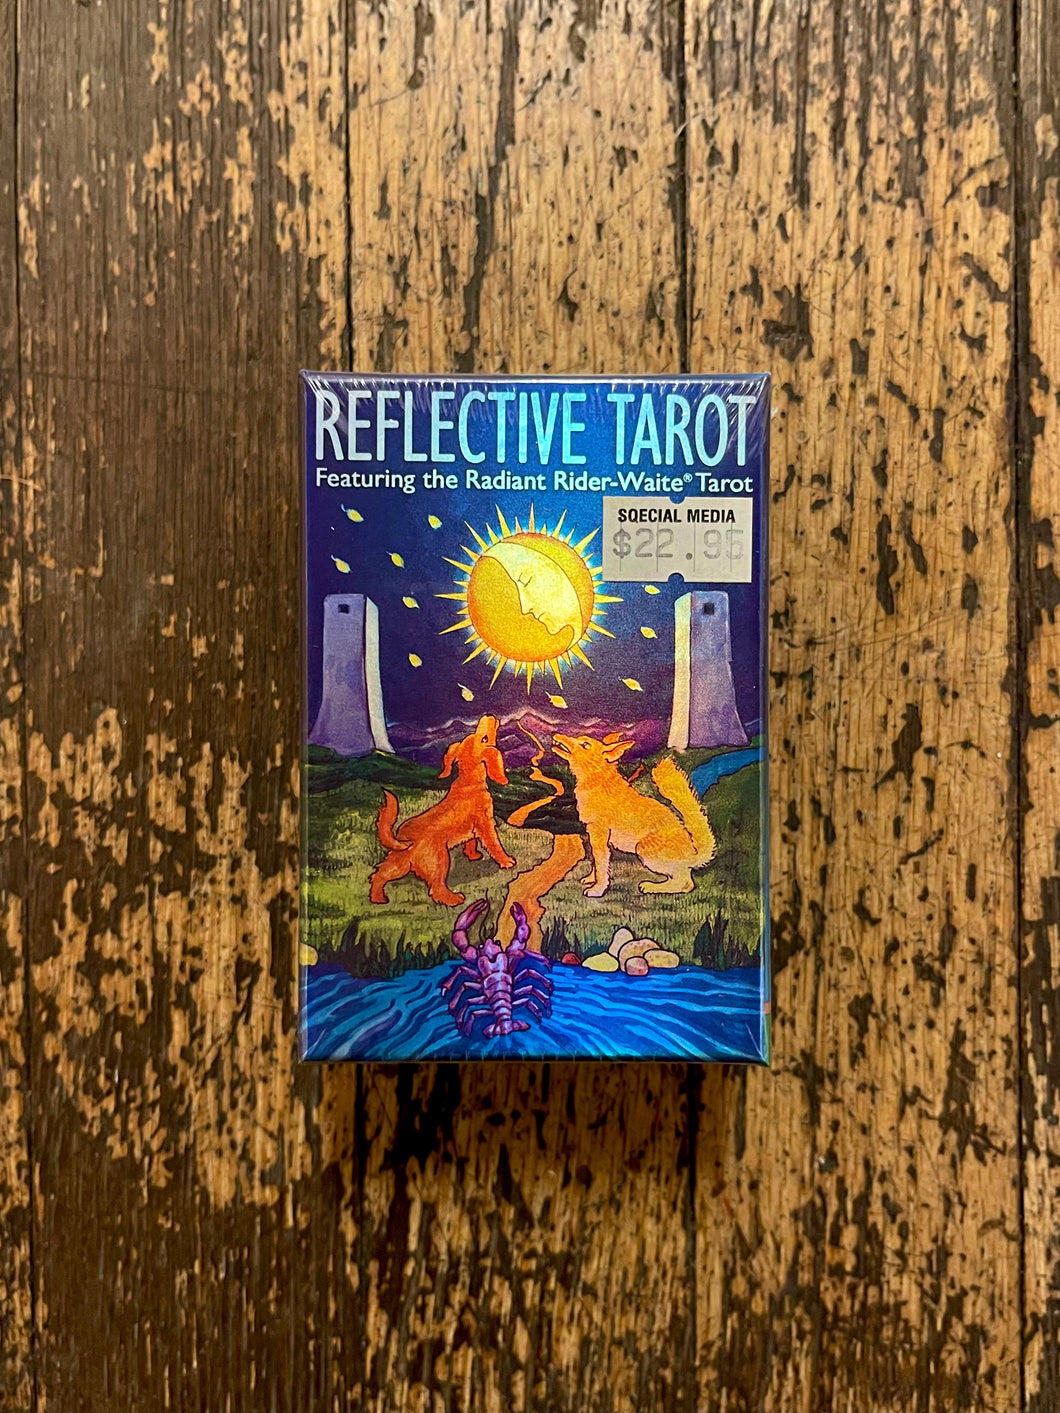 Reflective Tarot